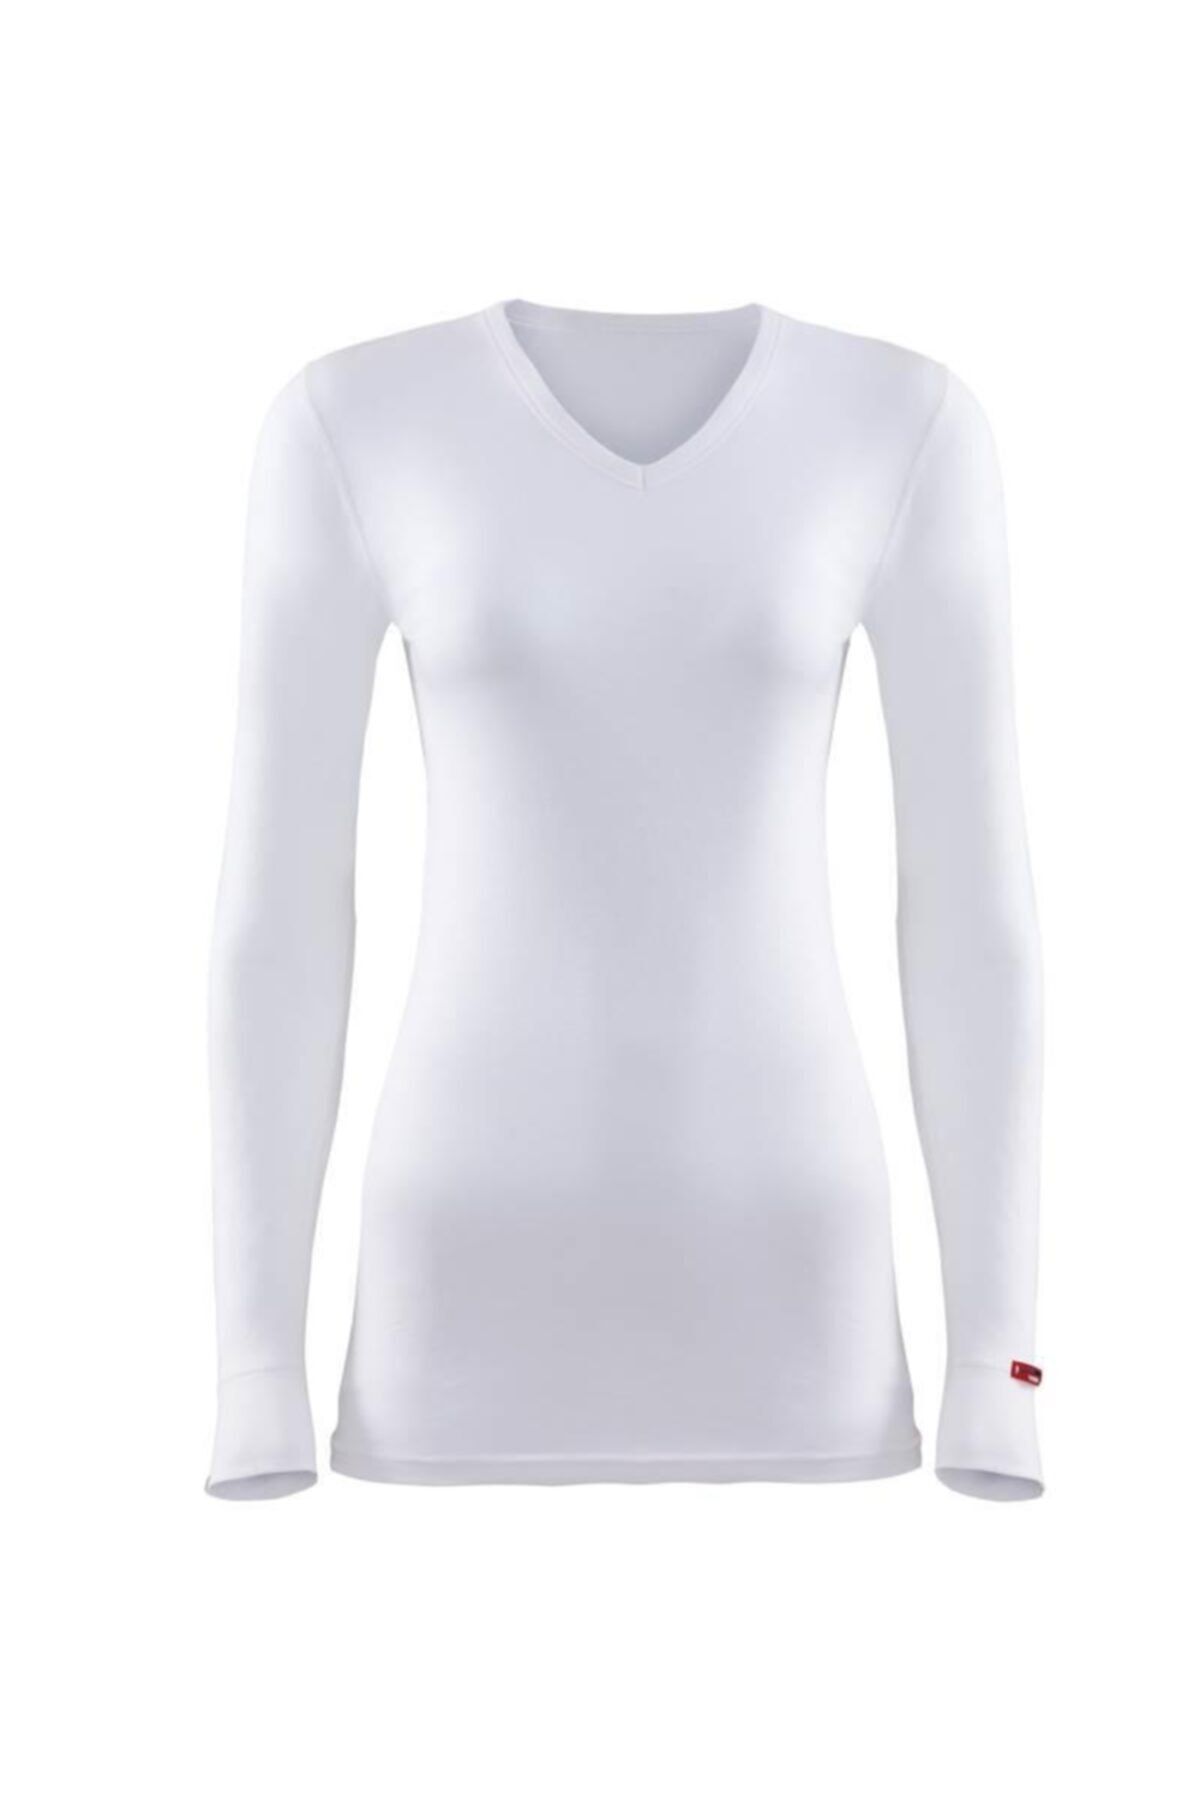 Blackspade Thermal Active Unisex V-neck T-shirt Long Slv